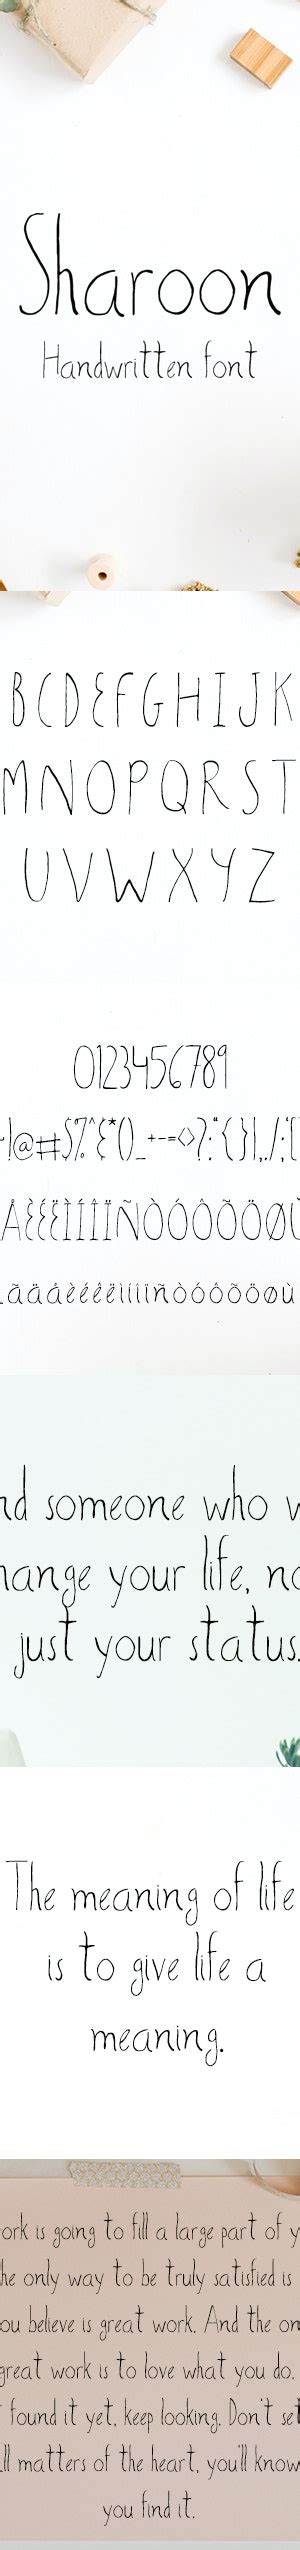 Sharoon Handwritten Sans Serif Font By Creativetacos Graphicriver